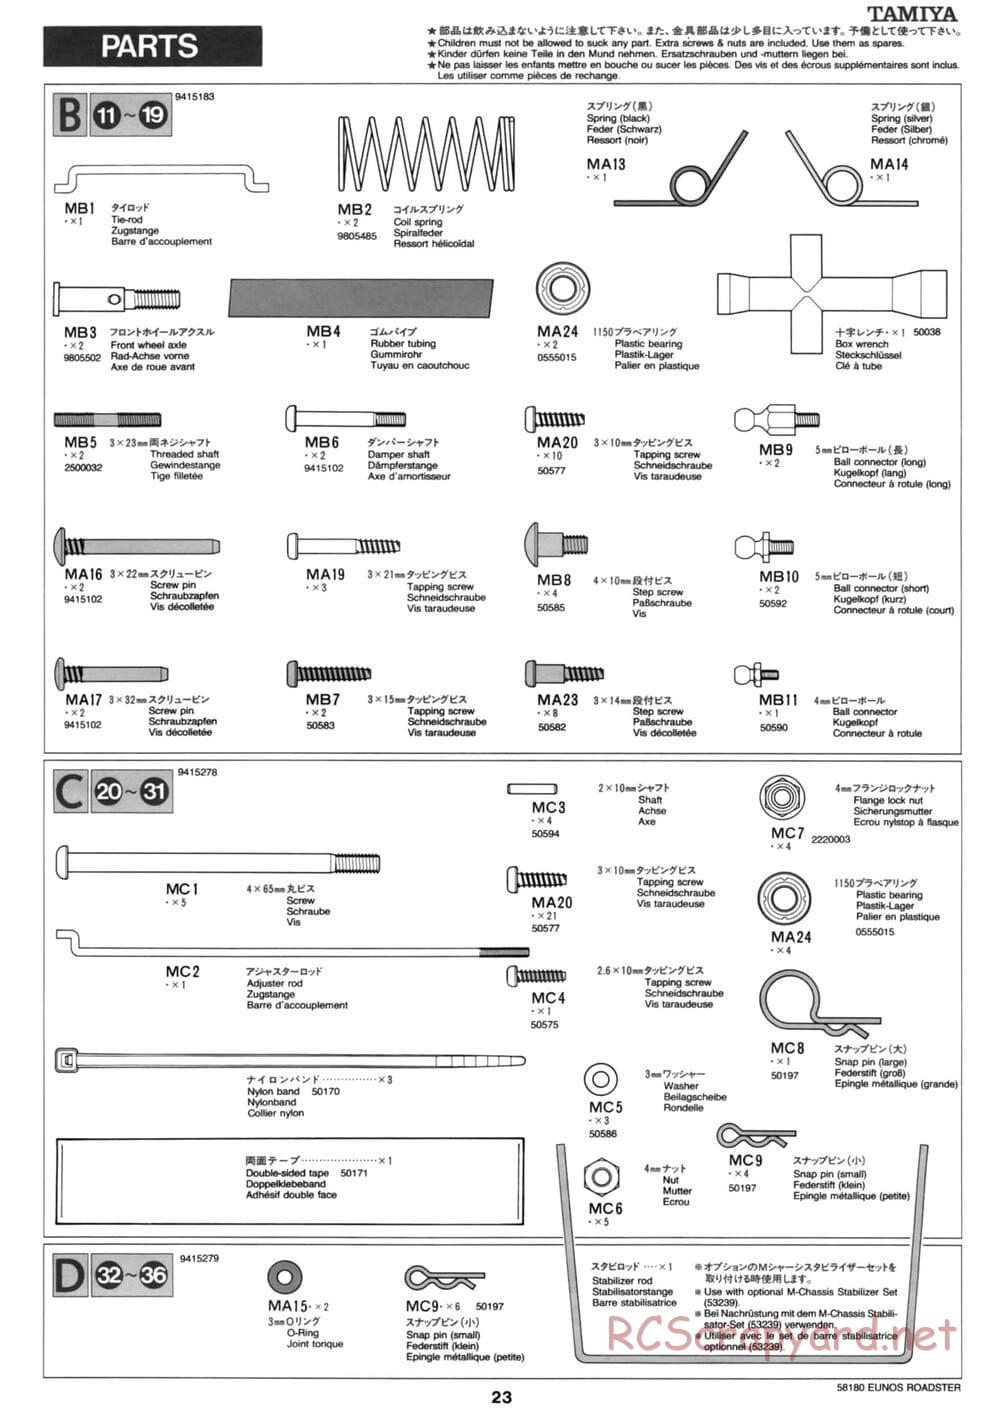 Tamiya - Eunos Roadster - M02M Chassis - Manual - Page 23